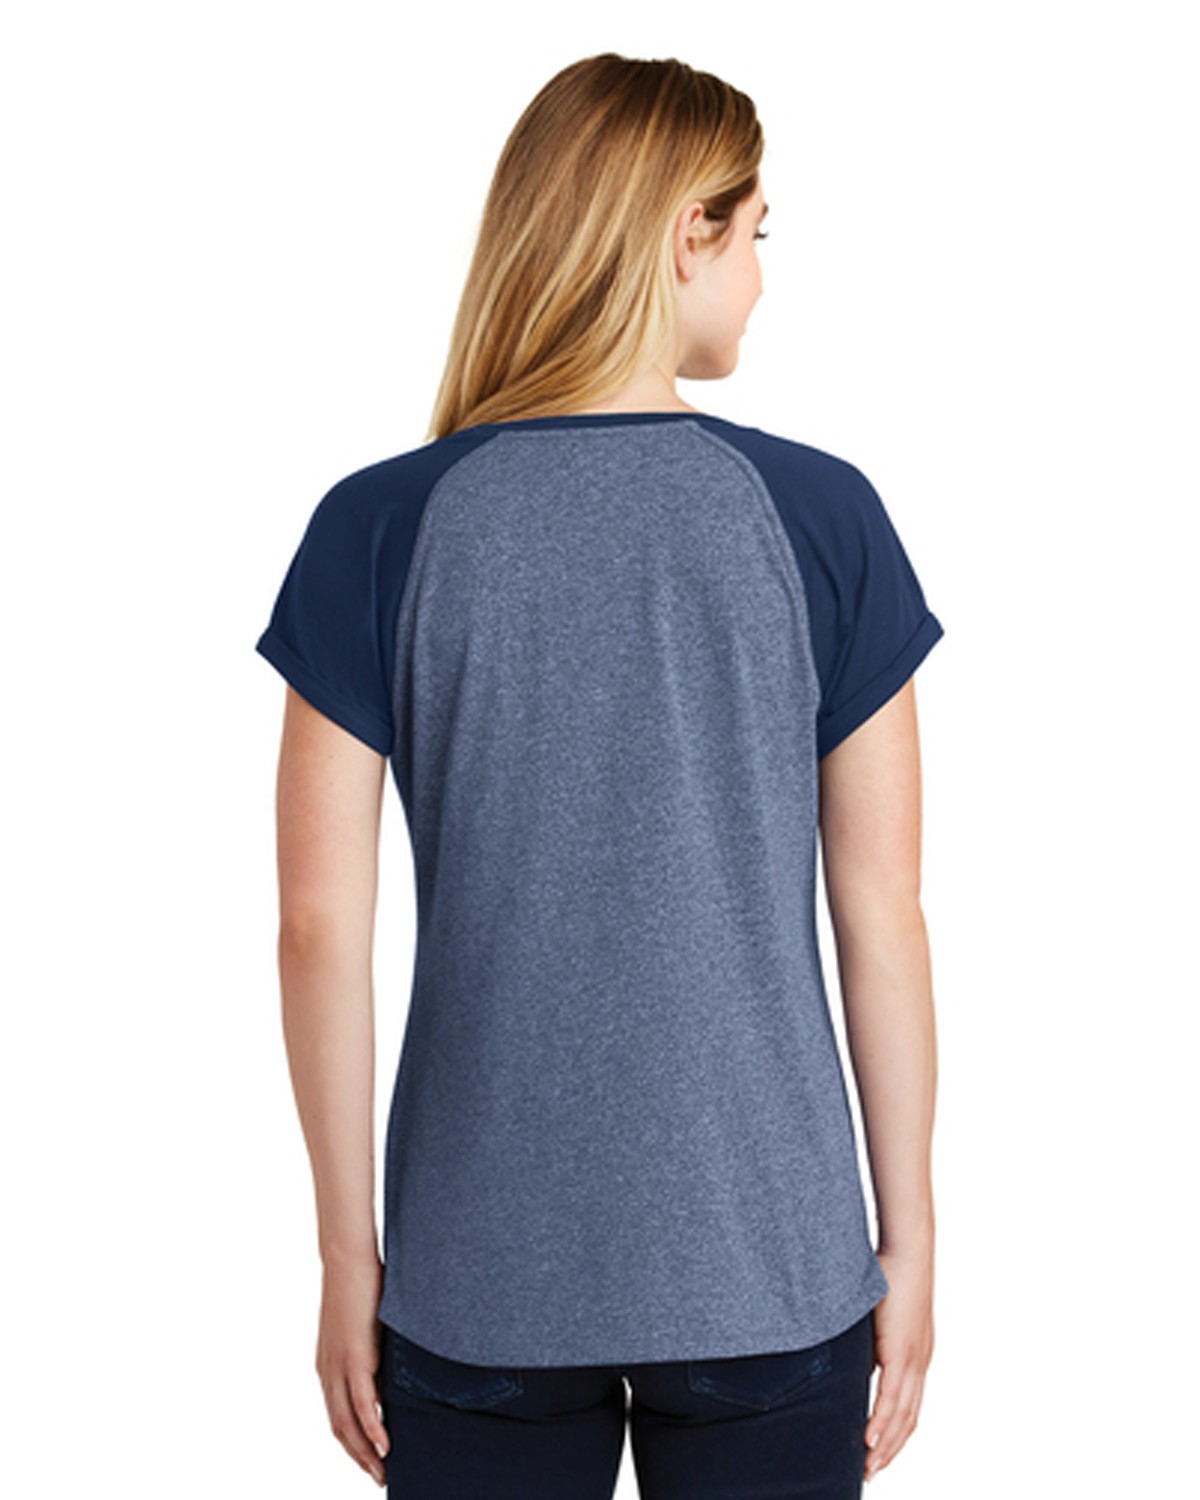 'New Era LNEA107 Women's Varsity T-Shirt'